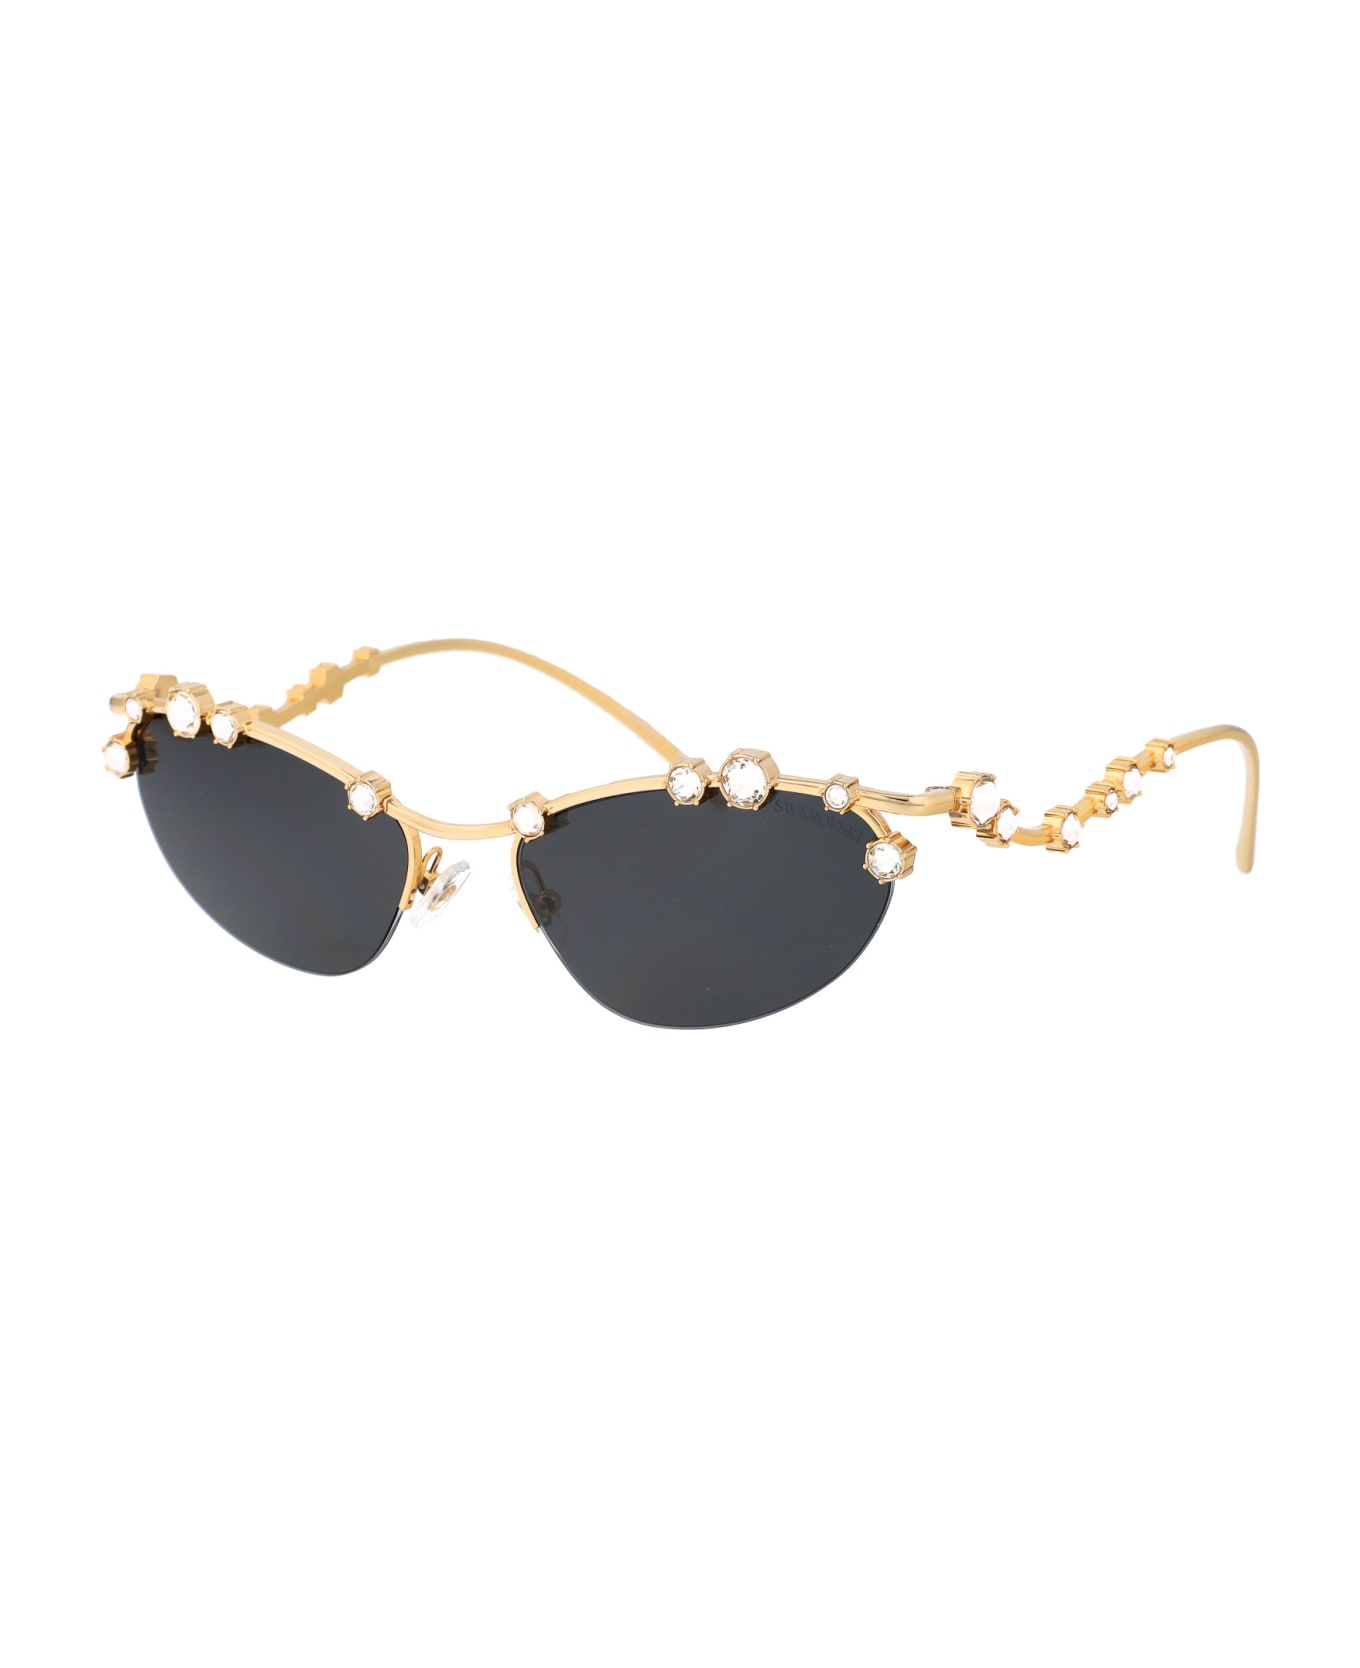 Swarovski 0sk7016 Sunglasses - 400487 Gold